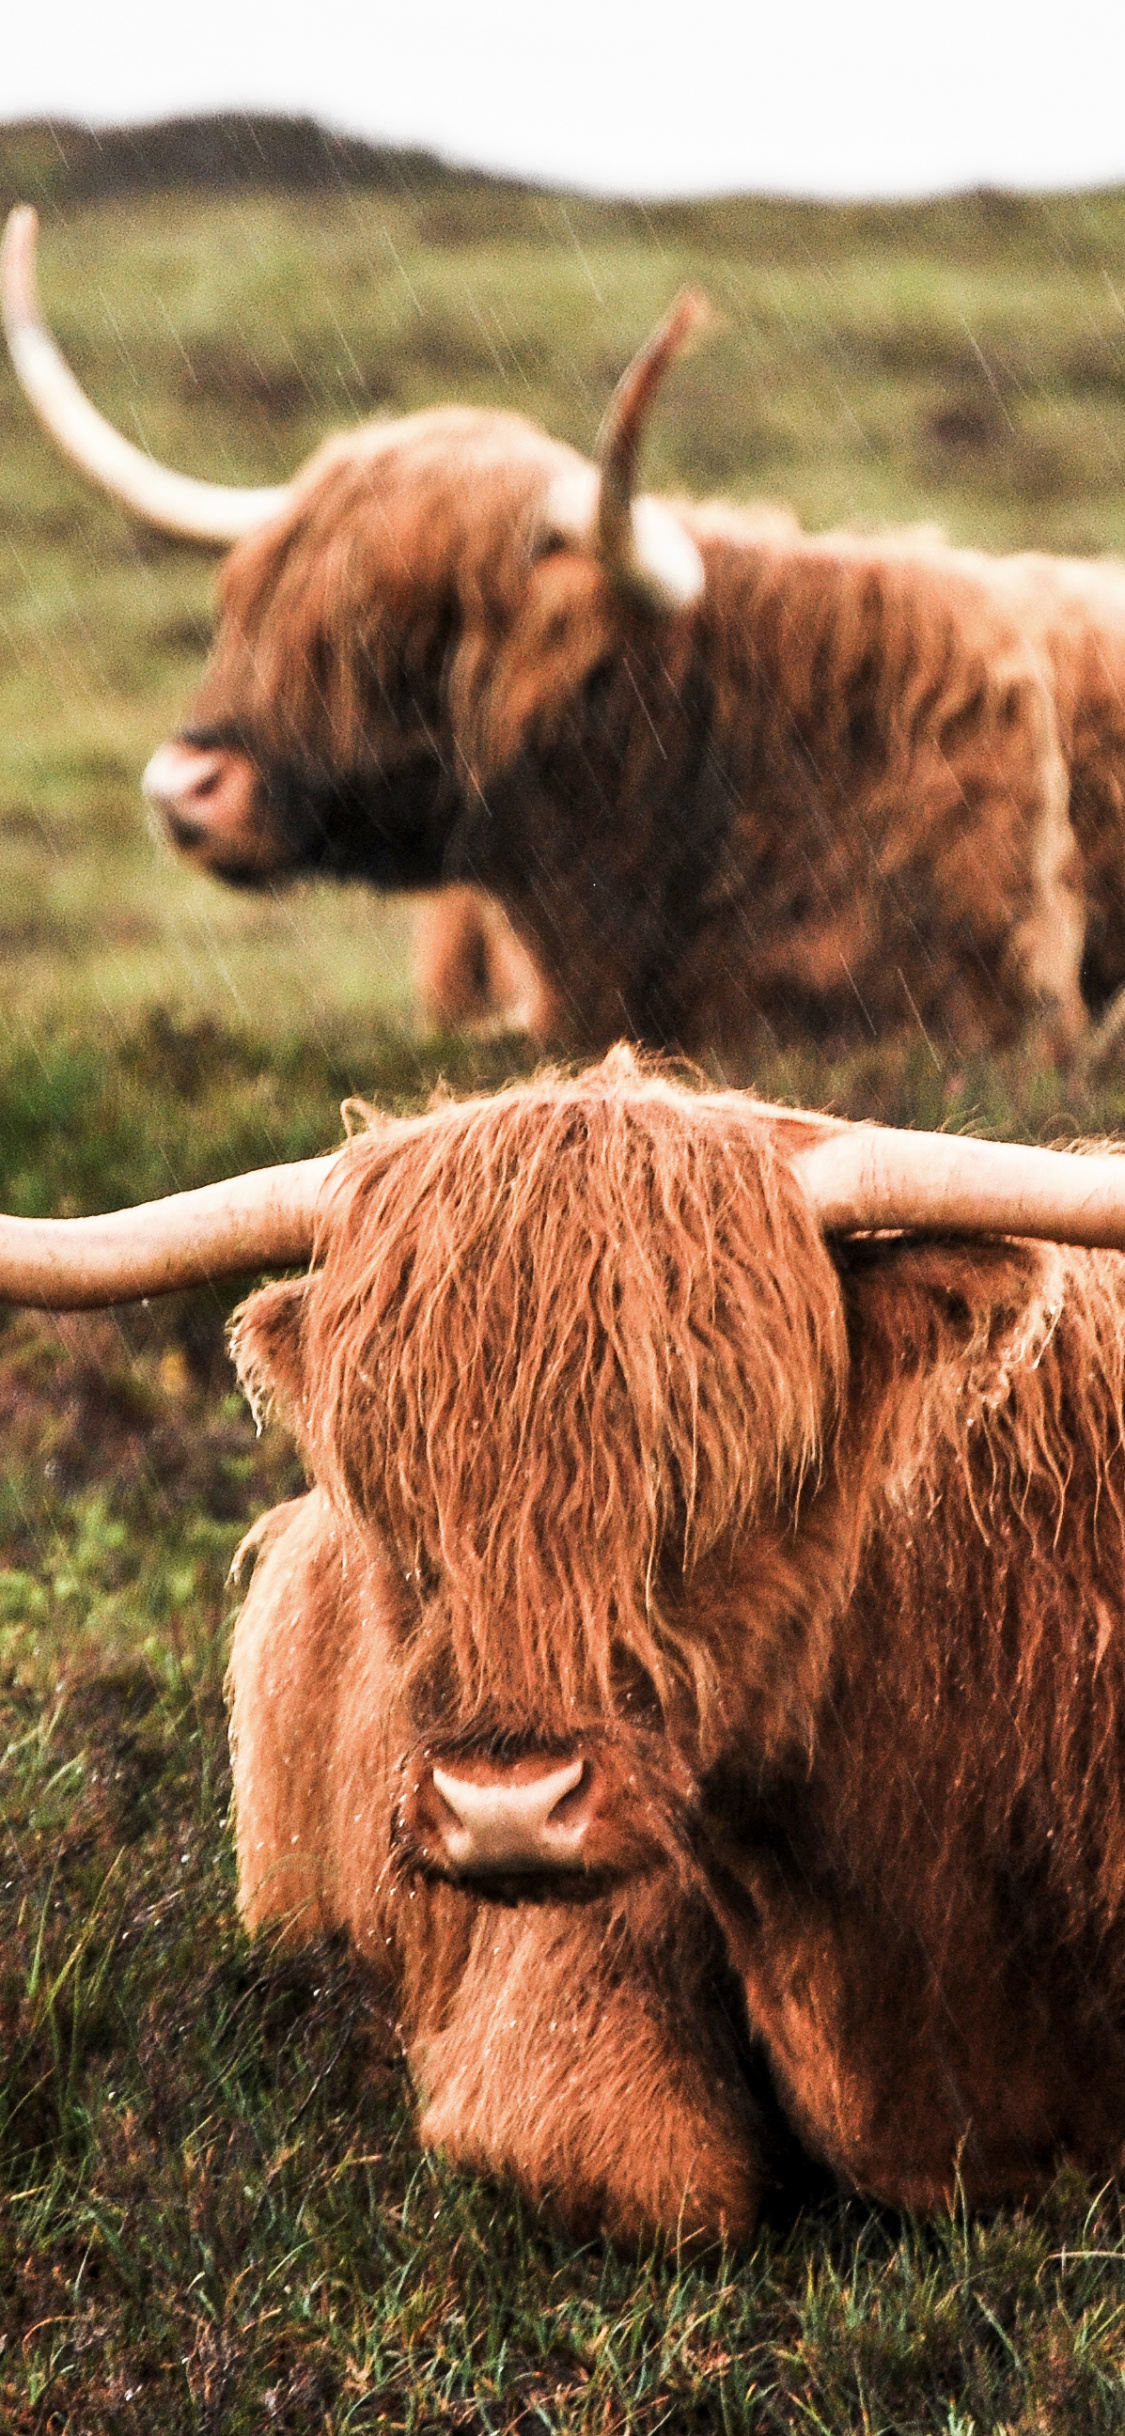 Cow wallpapers, Bovine beauty, Farm animals, Countryside scenes, 1130x2440 HD Handy